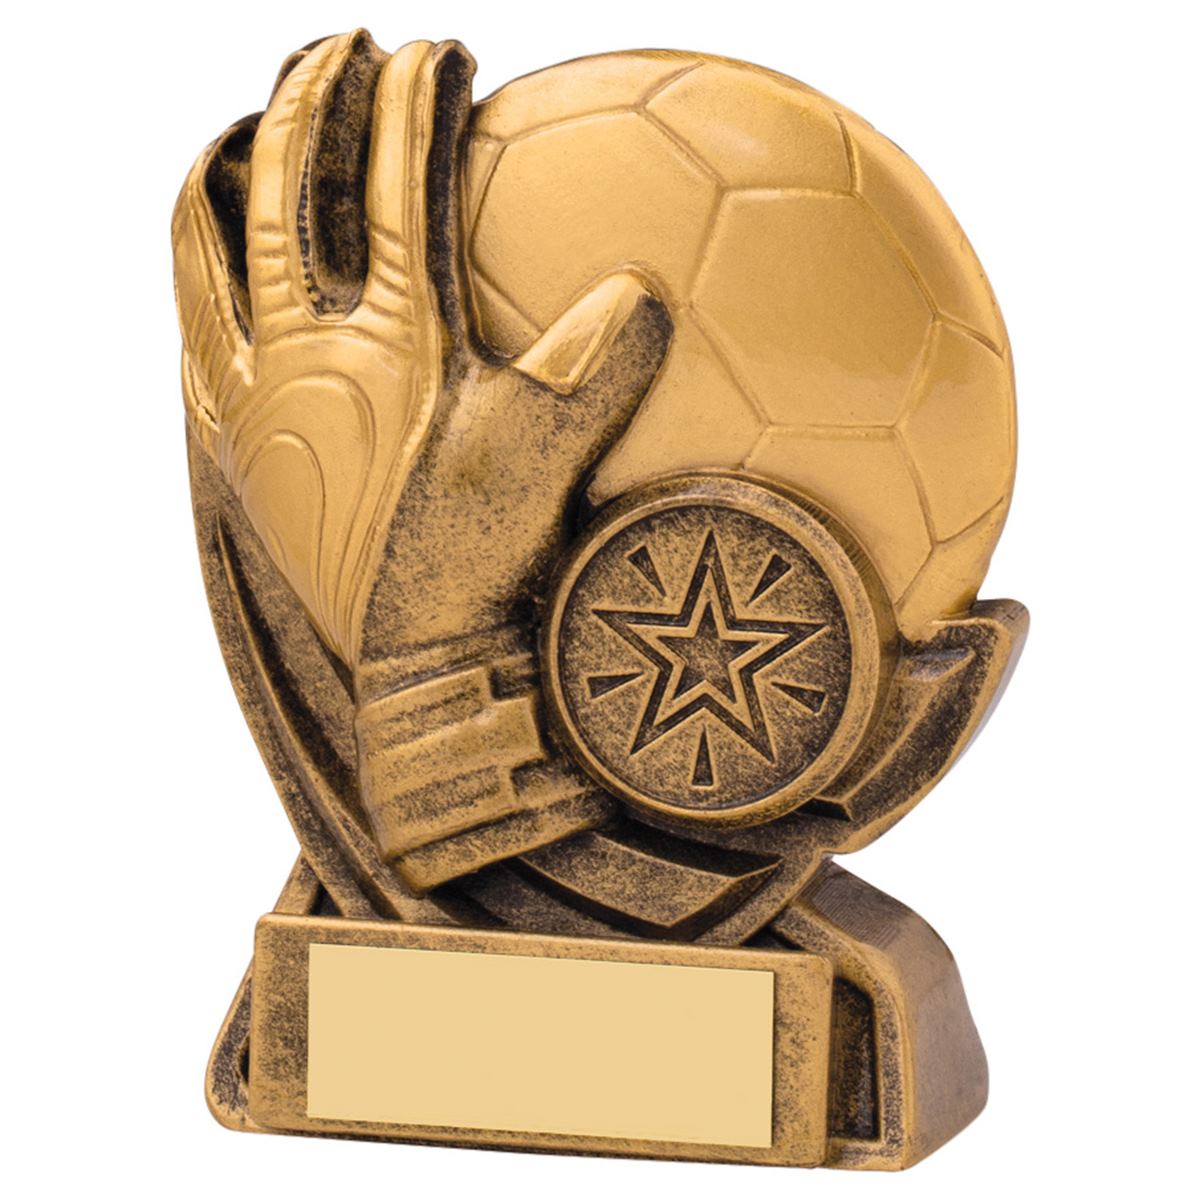 Football Trophy Goalkeeper Gold Motion Award